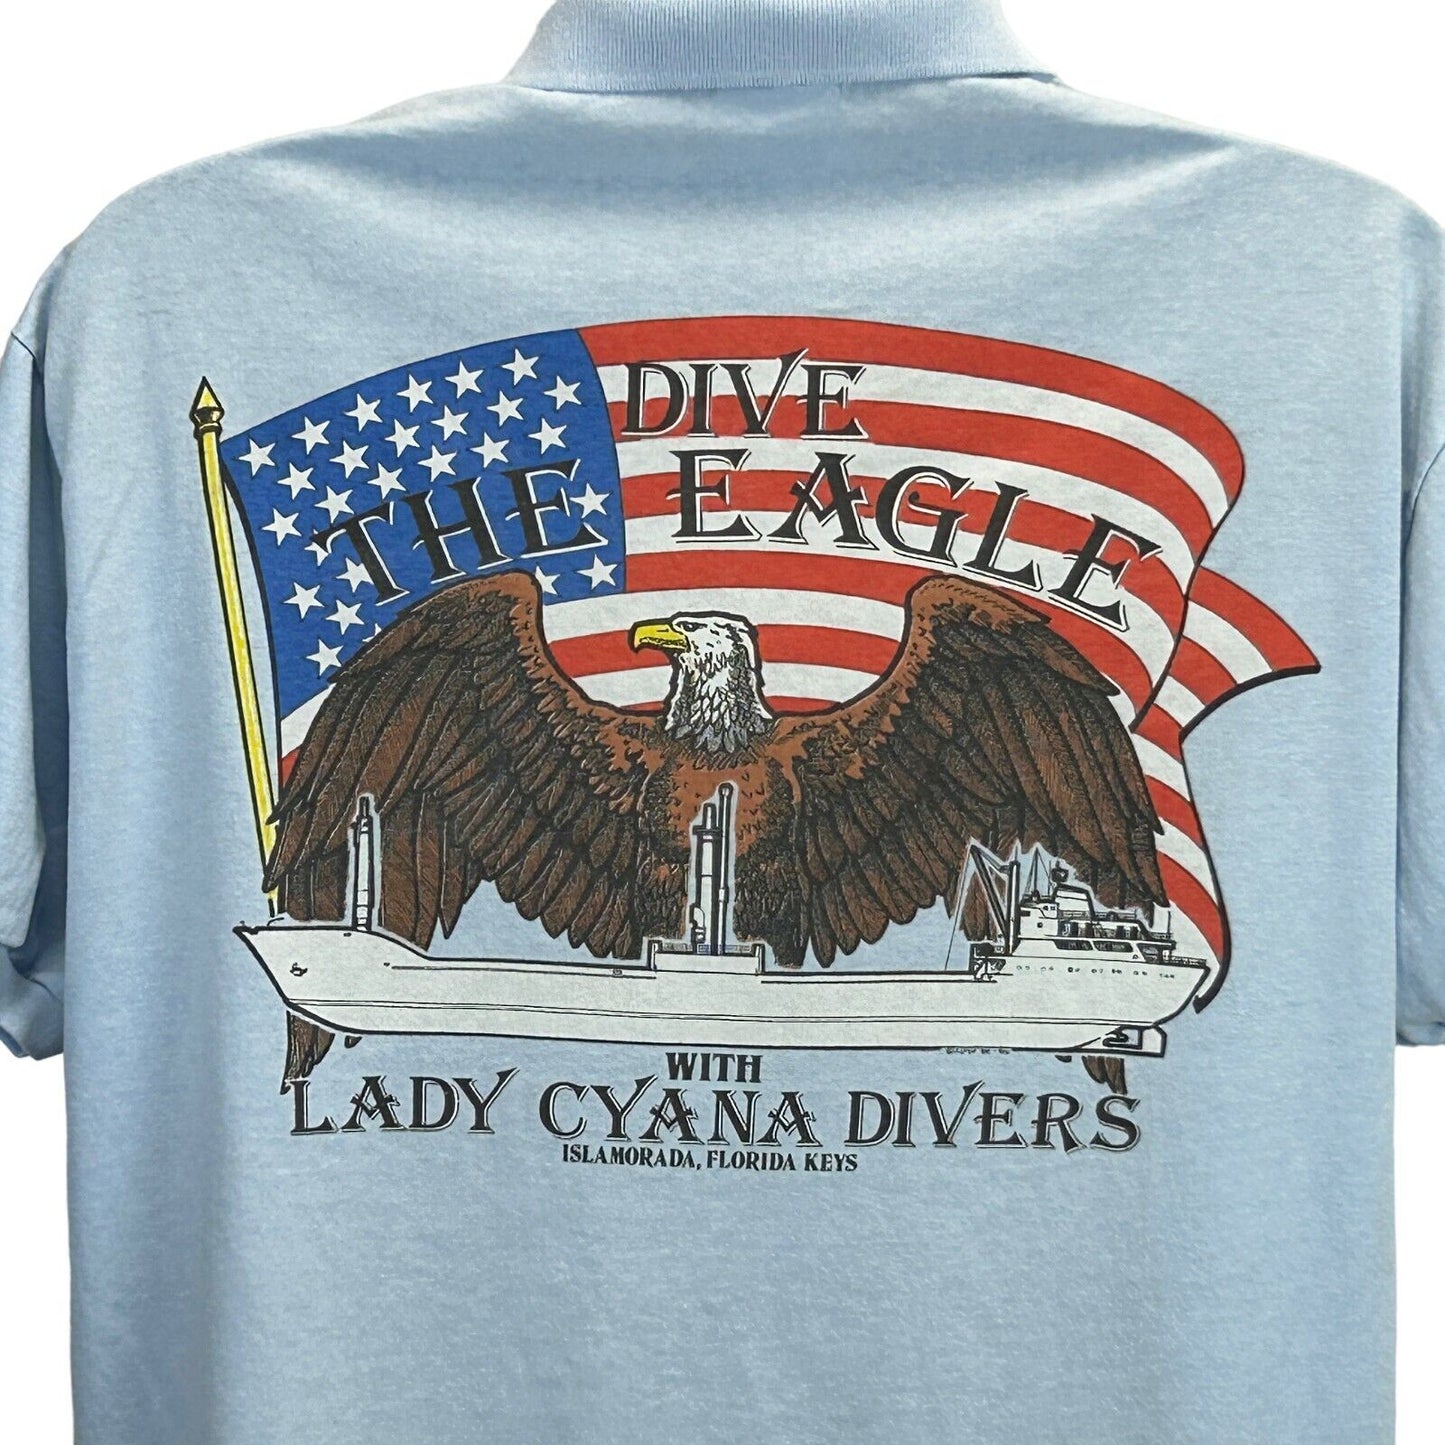 Lady Cyana Divers Vintage 90s Polo T Shirt Dive The Eagle Florida Diving Large